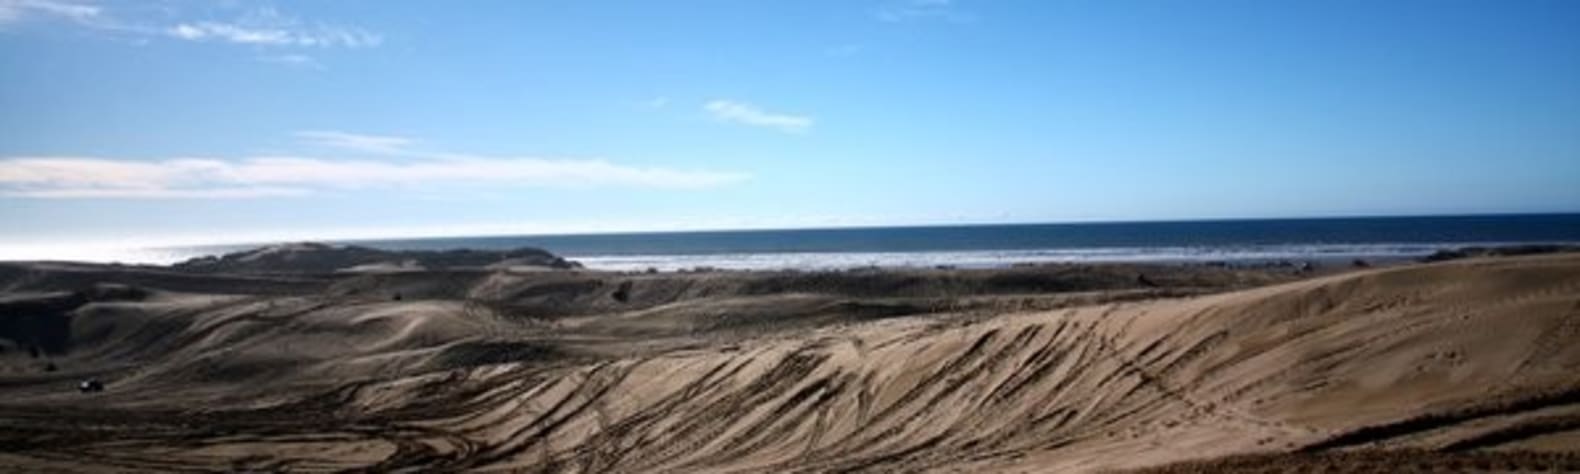 Oceano Dunes State Vehicular Recreation Area